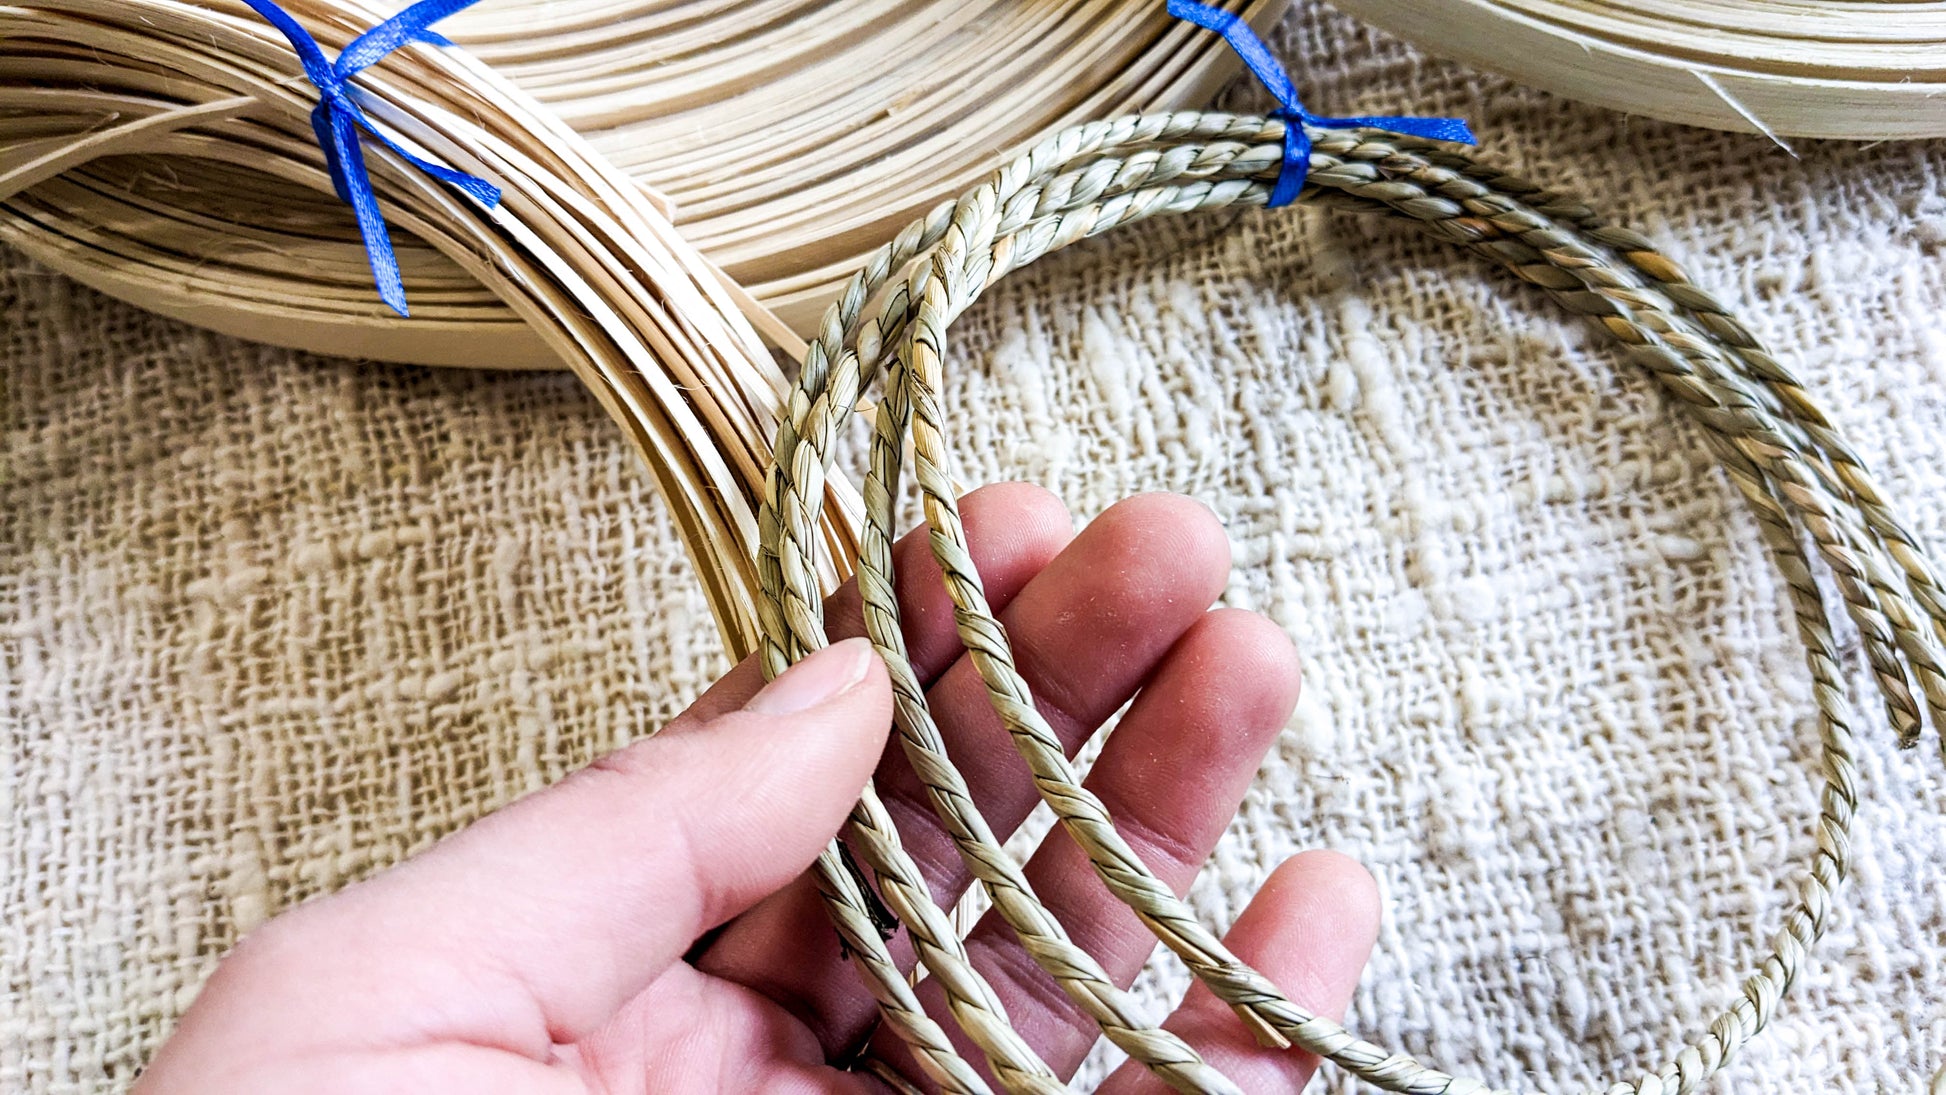 Rope-Handled Basket Weaving Kit for Beginners